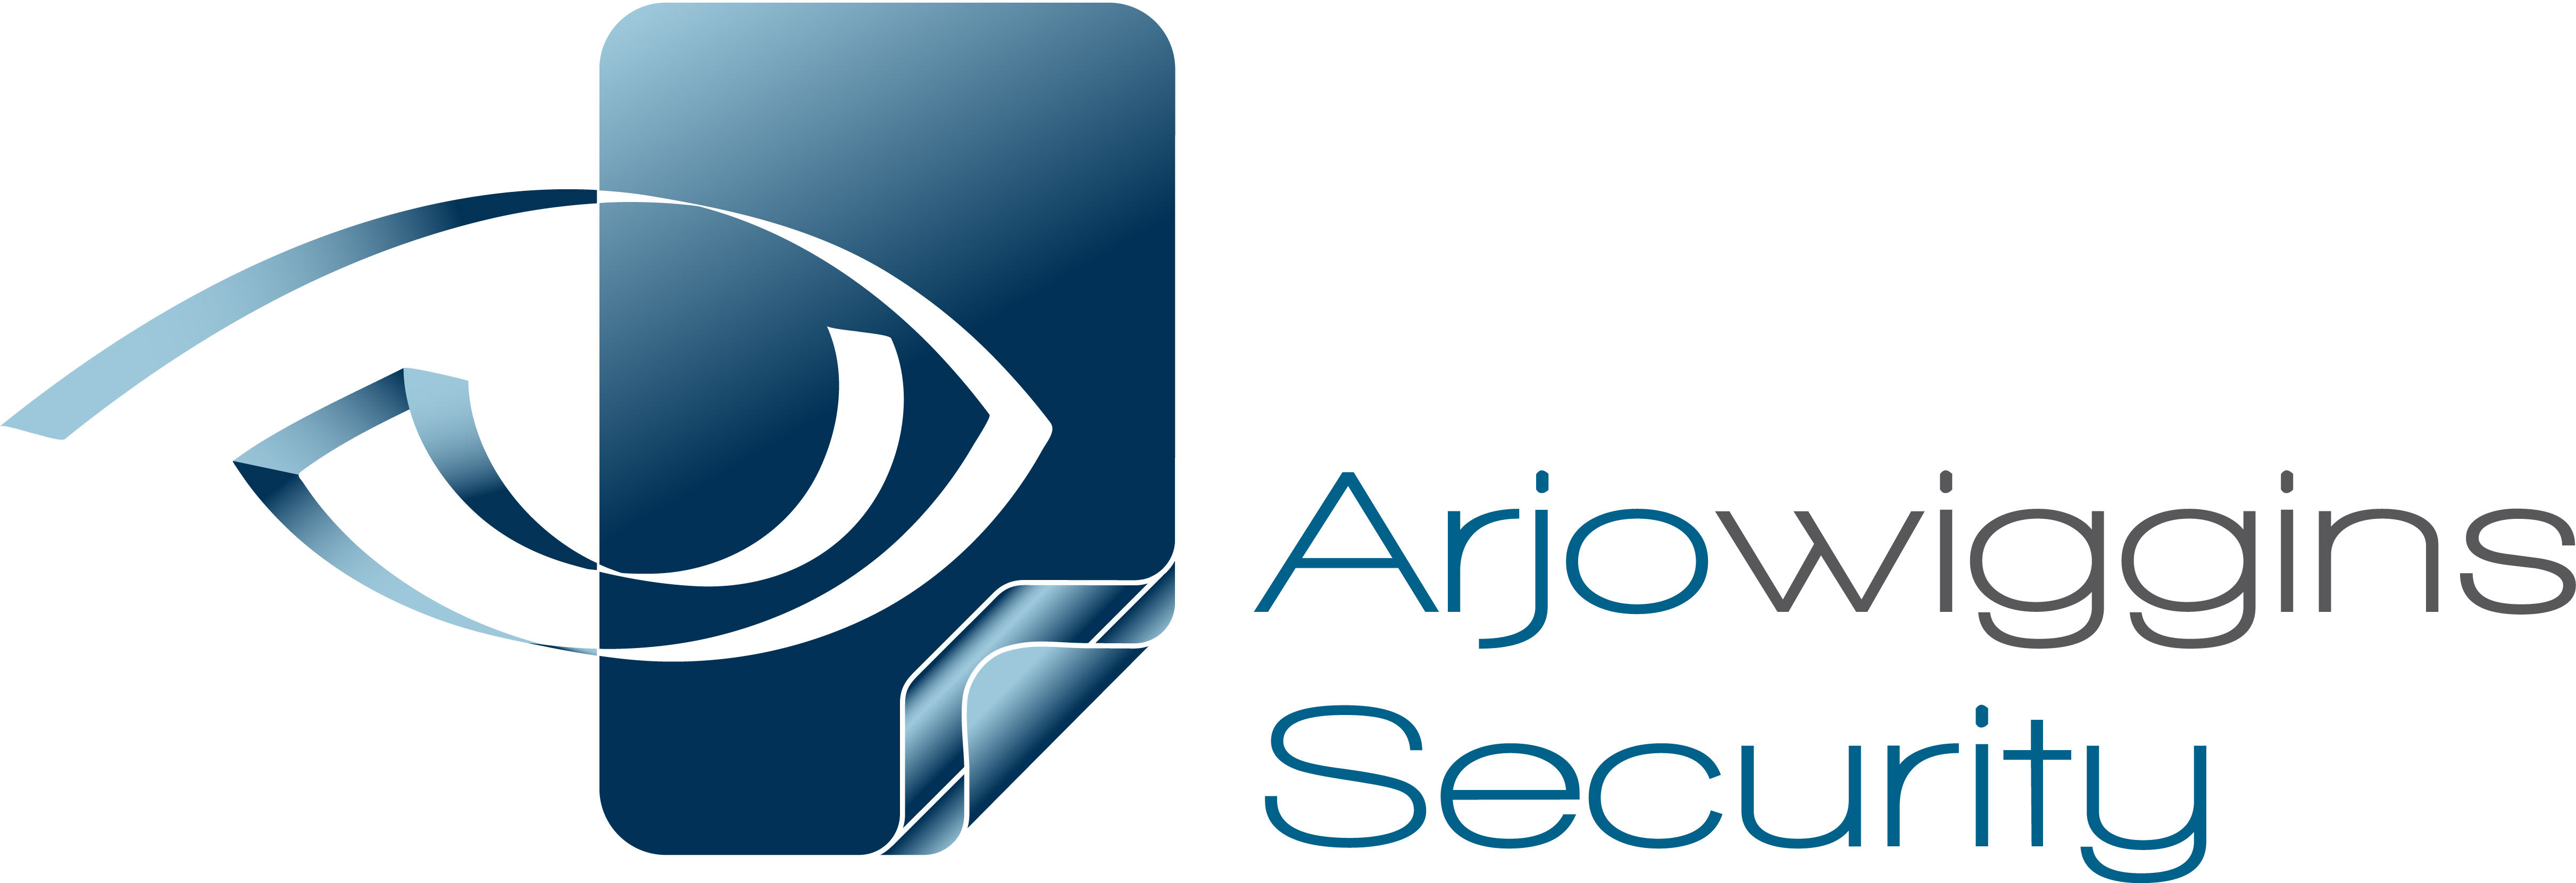 Arjowiggins Security Logo photo - 1